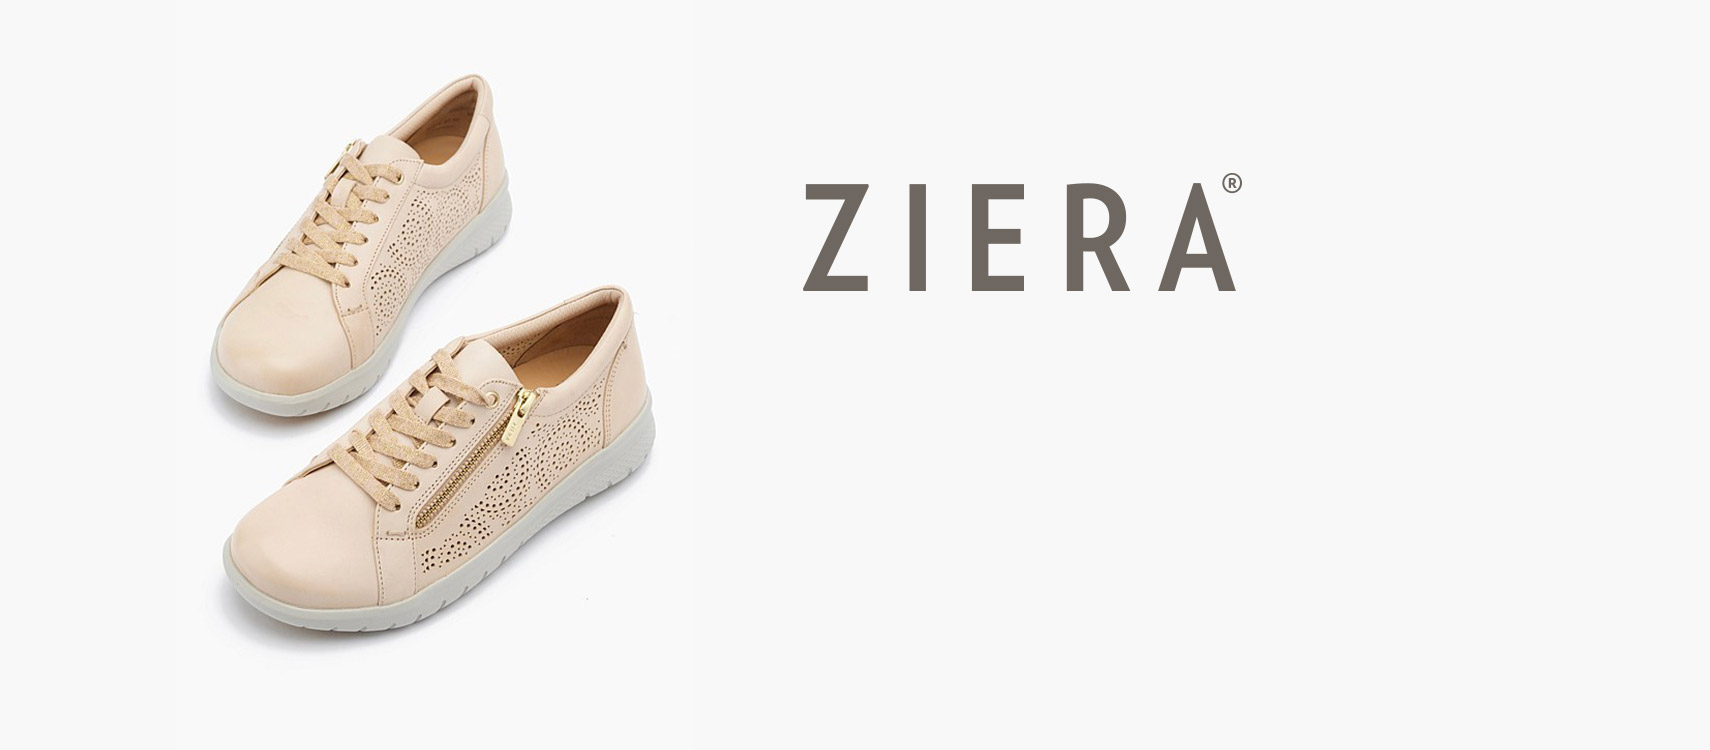 Ziera Shoes - Modern \u0026 Minimal Style by 